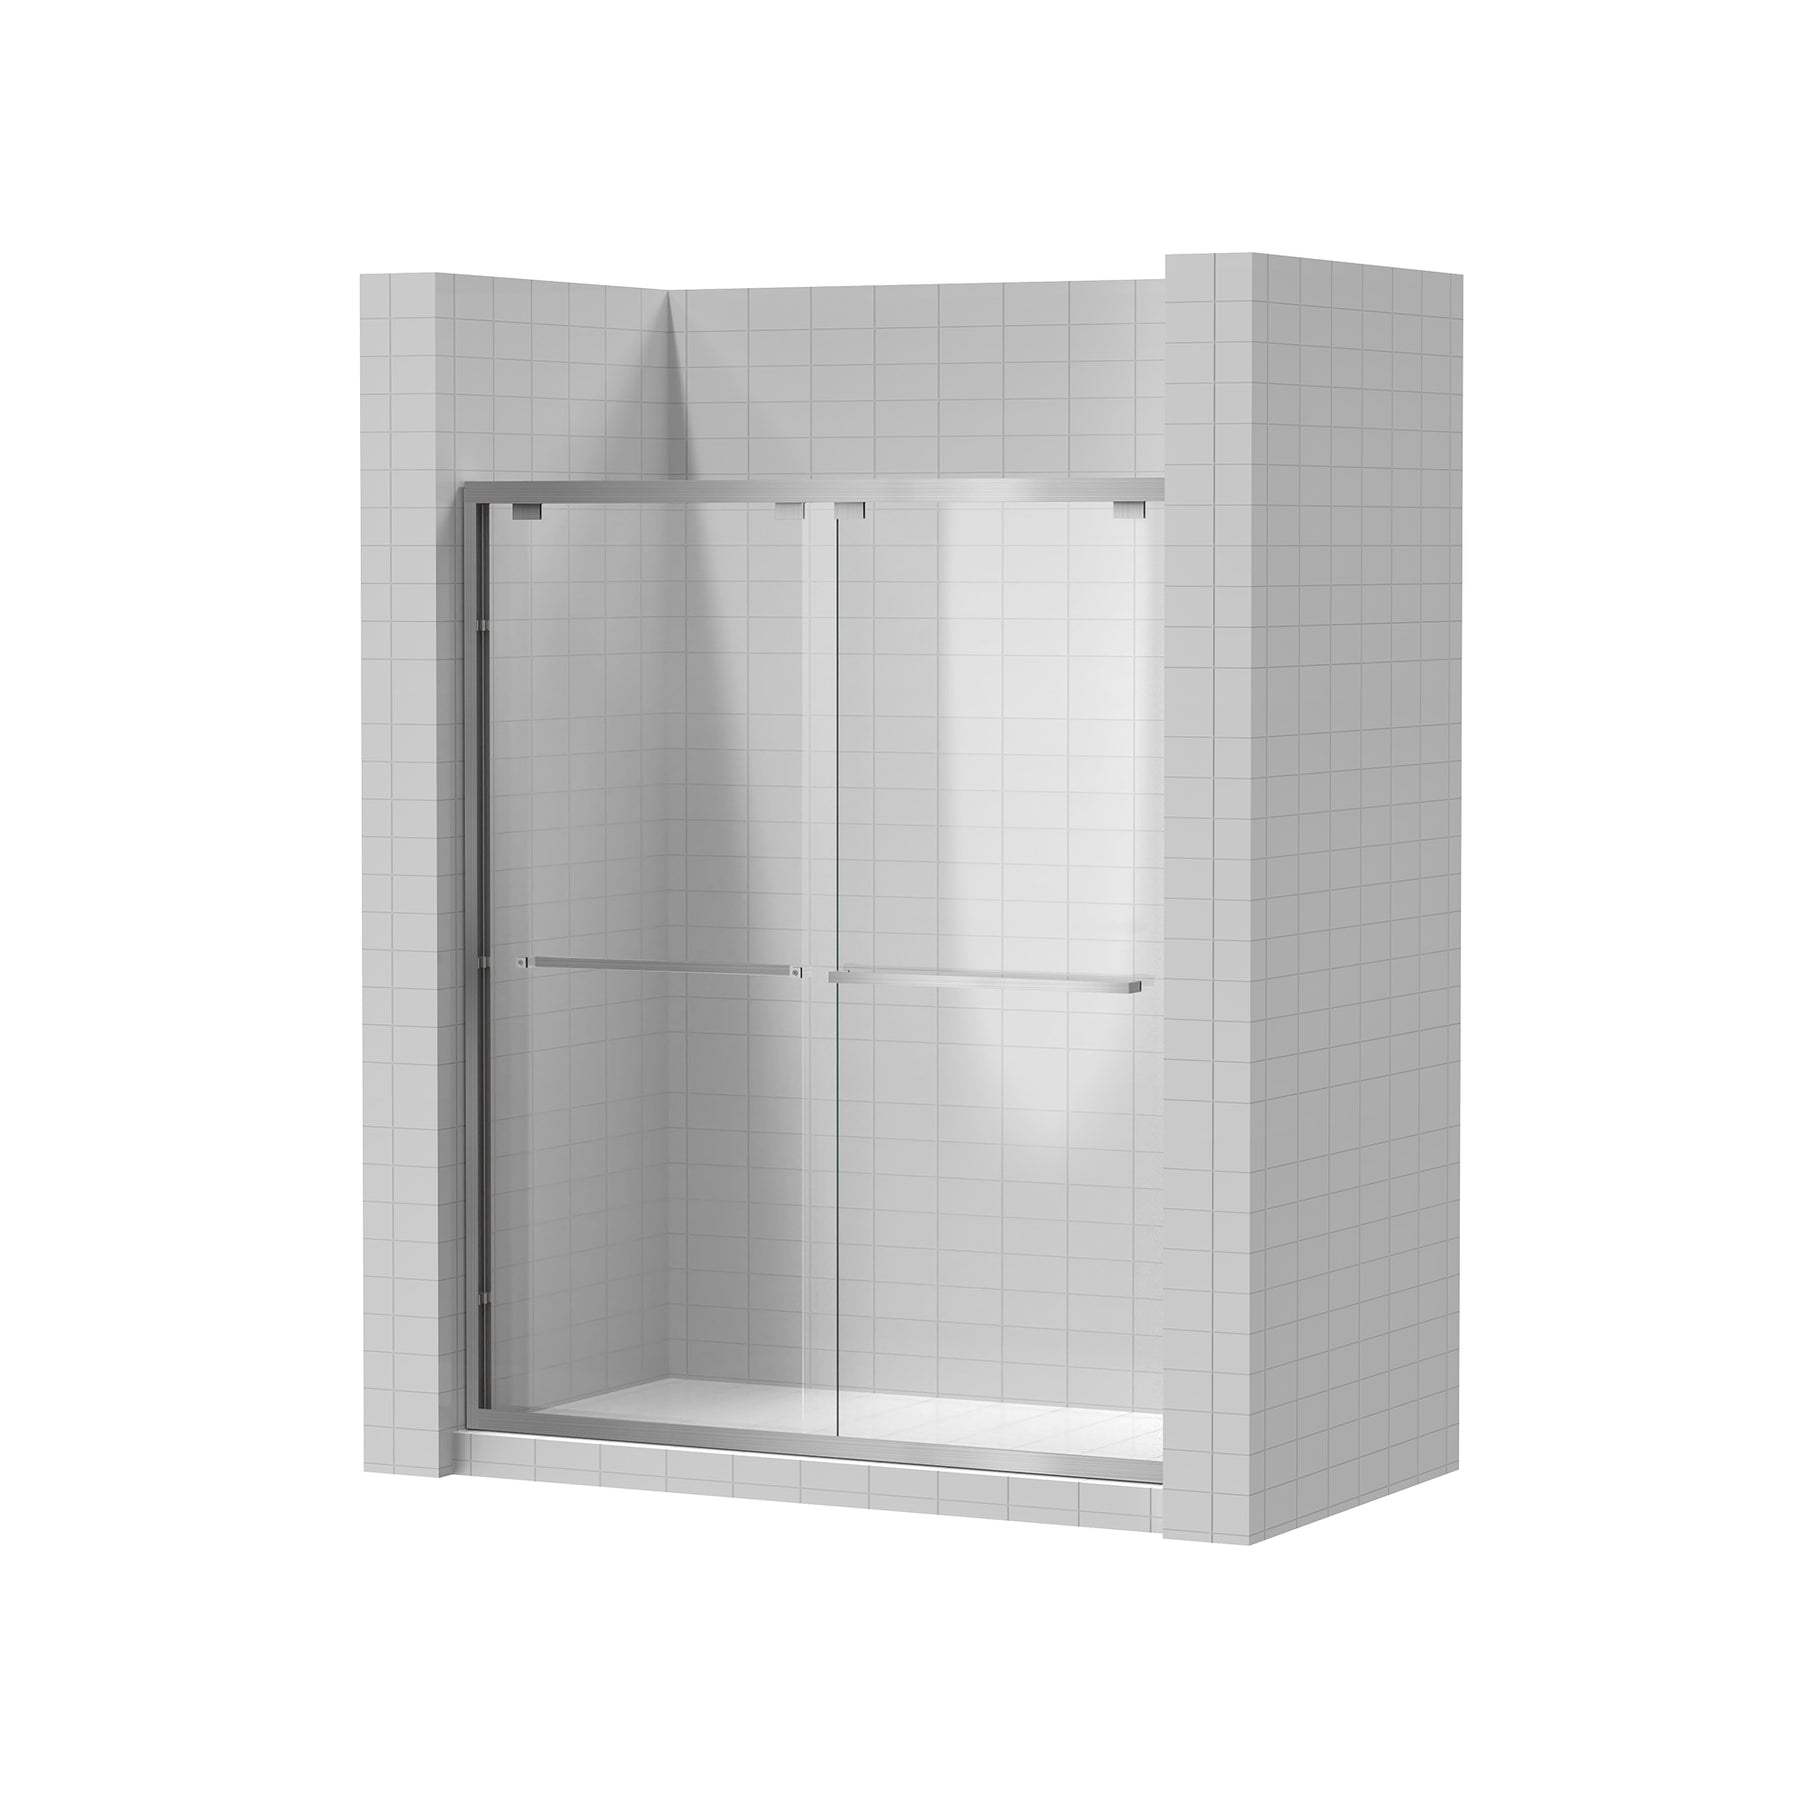 SL4U Double Sliding Shower Doors Glass Shower, Brushed Nickel 60'' W x 72''H